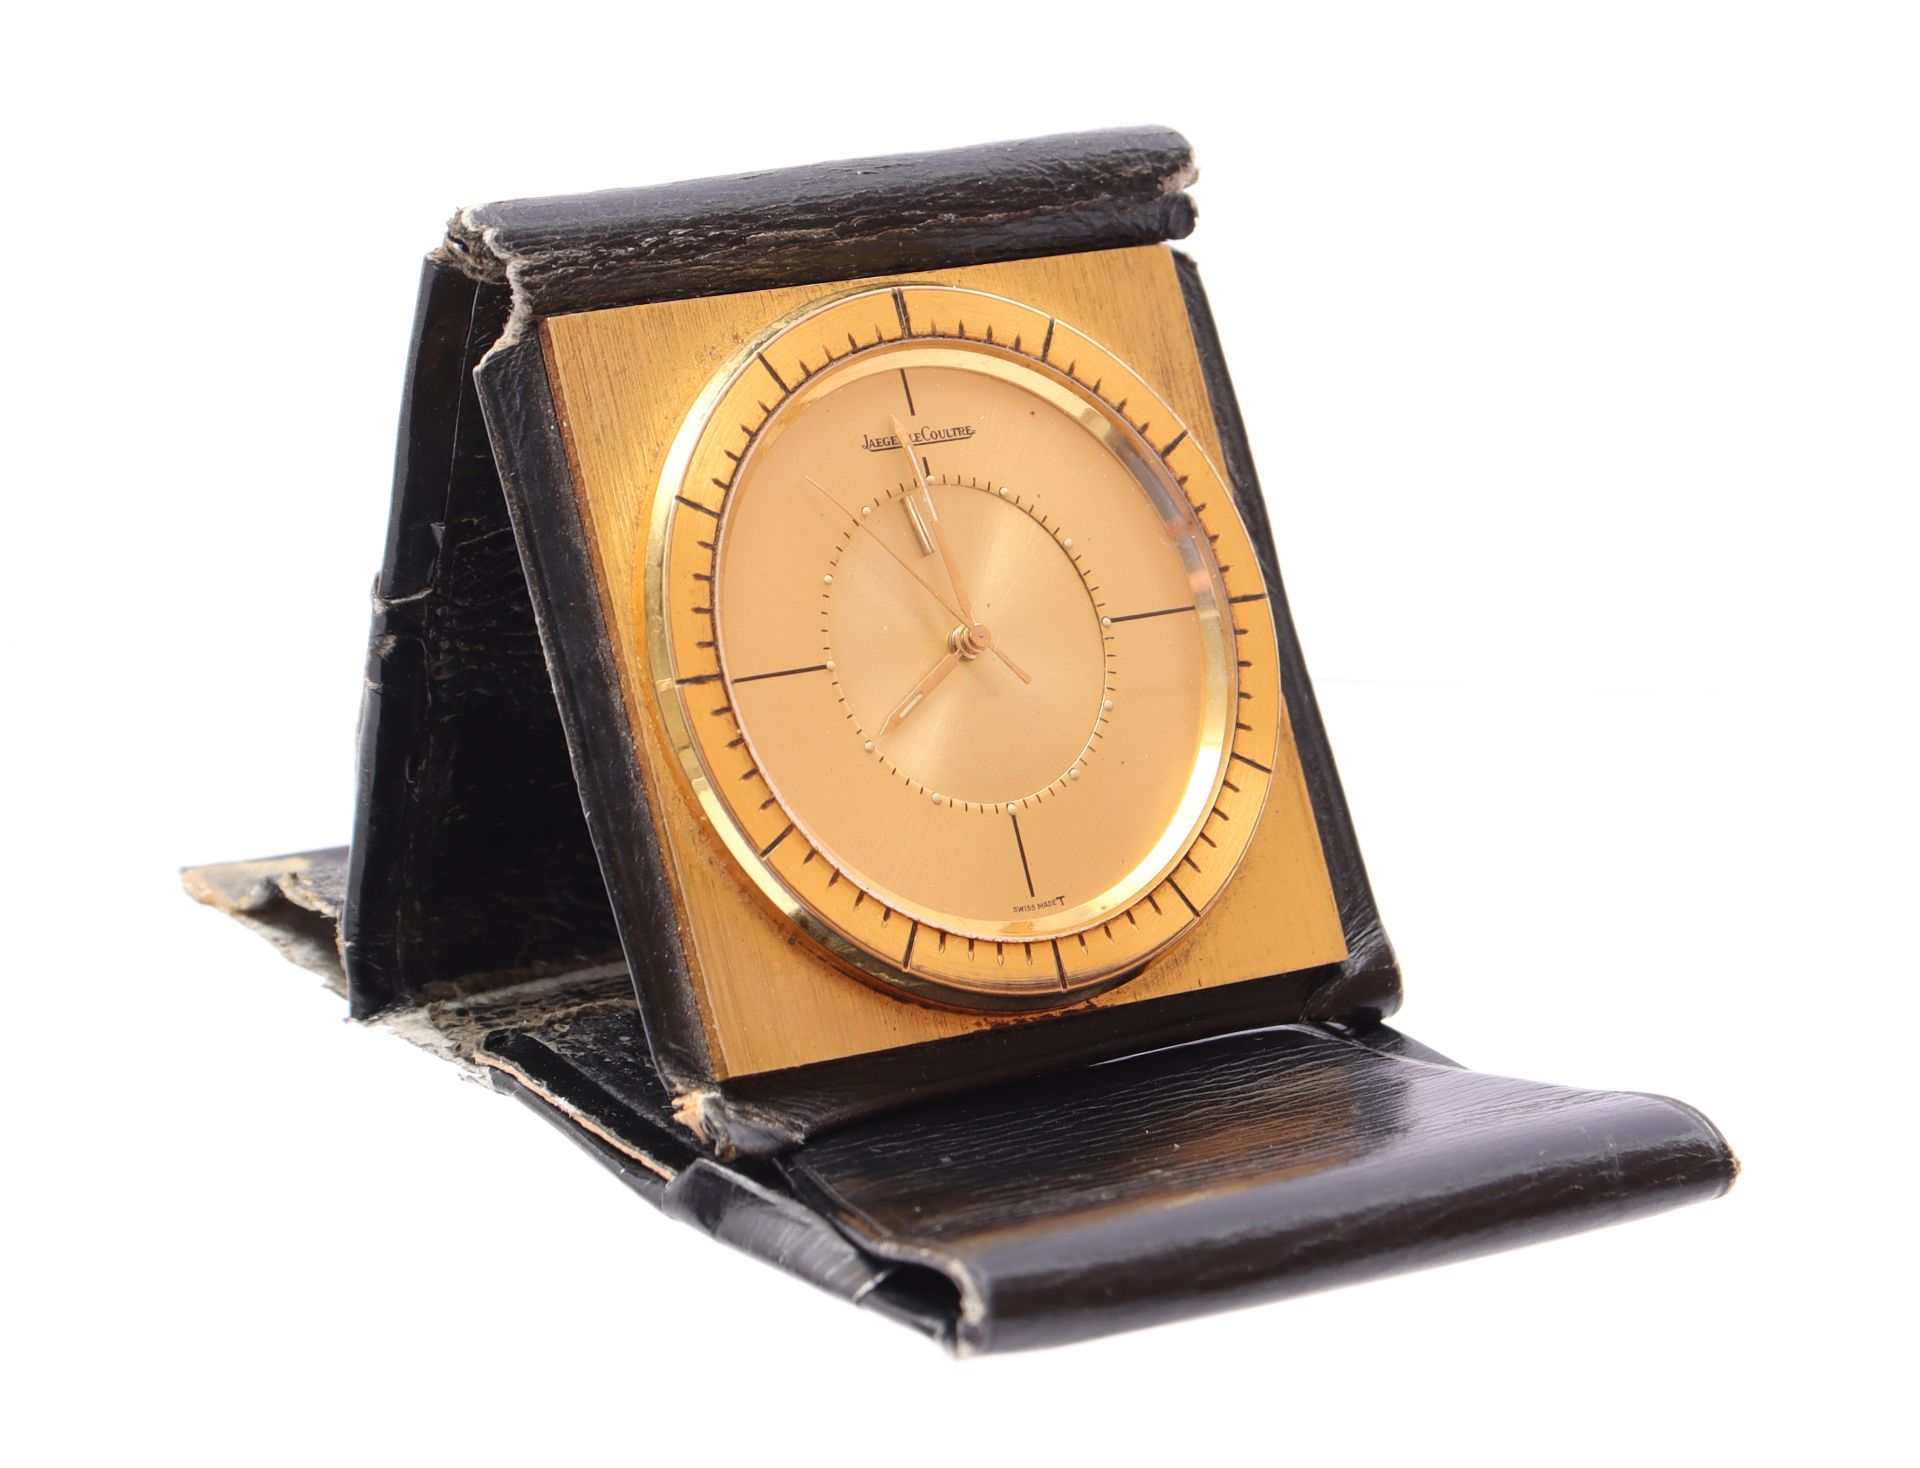 Jaeger LeCoultre Memovox travel alarm clock in leather case